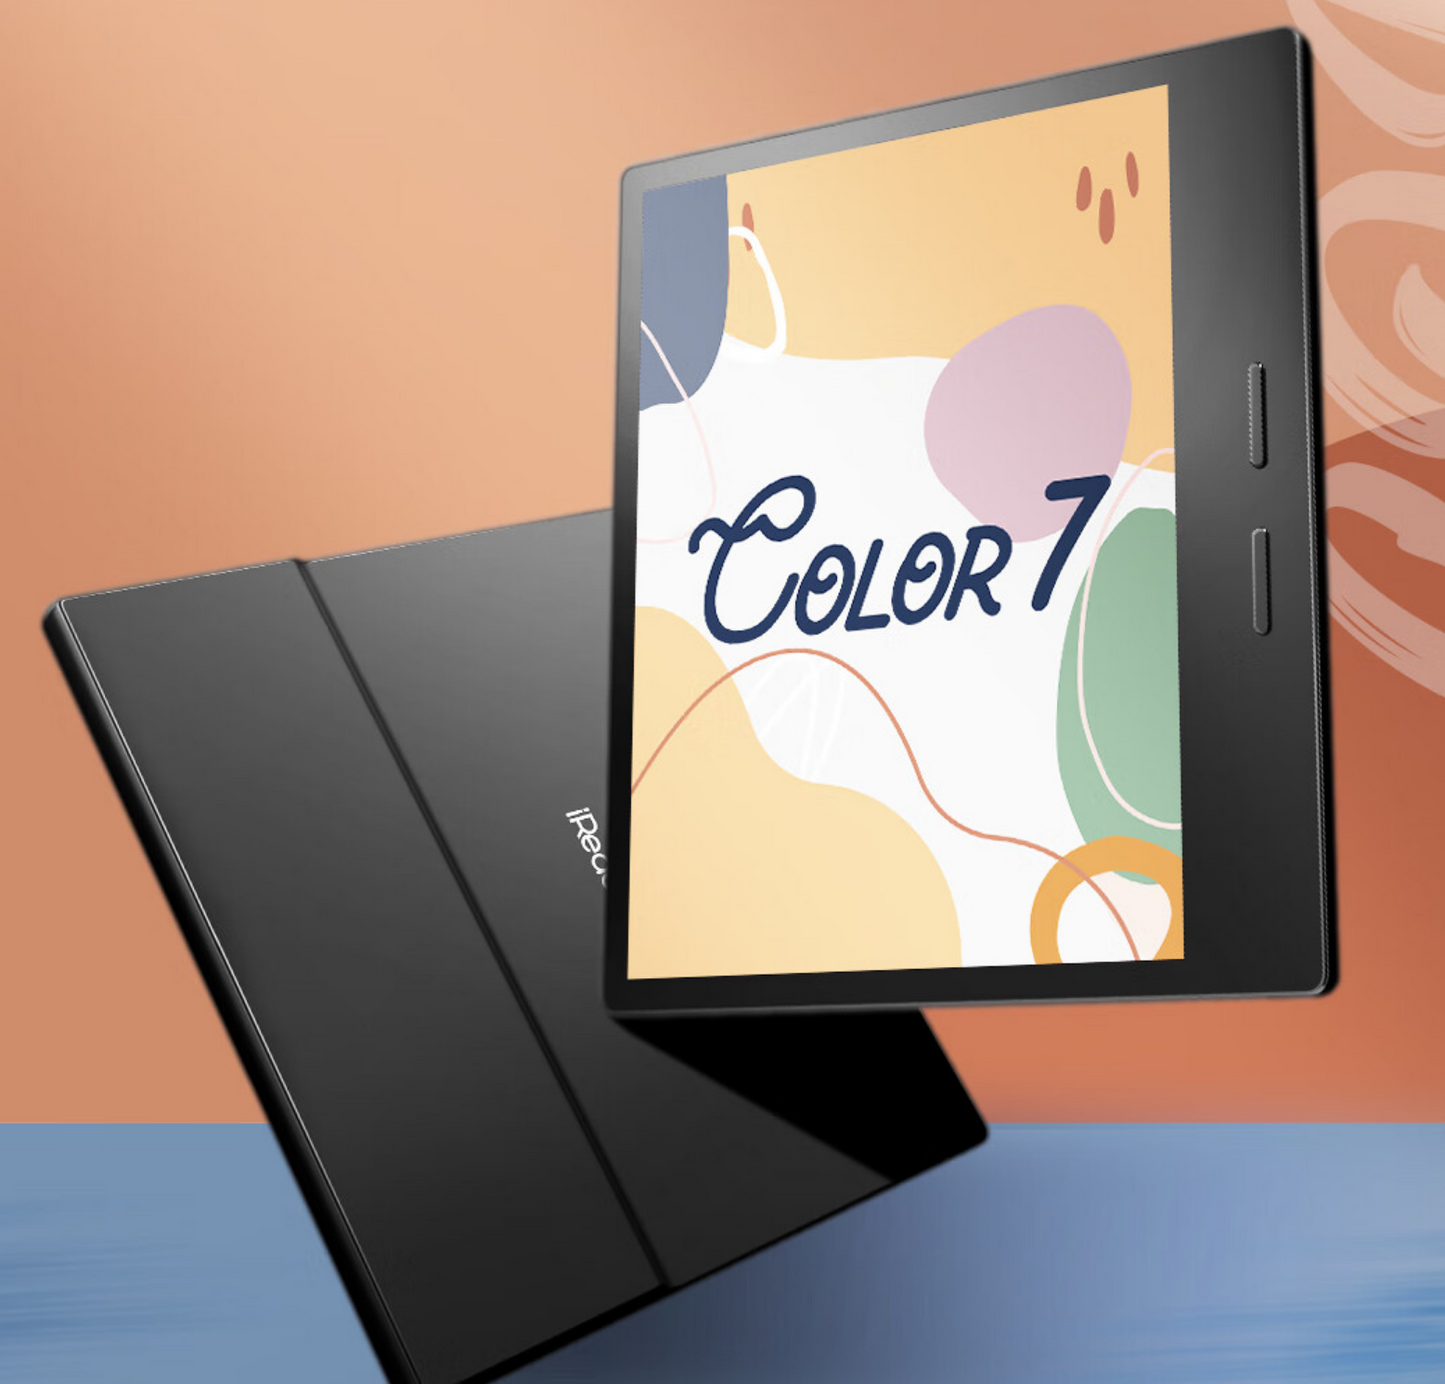 iReader Color 7 - Kaleido 3 color e-reader